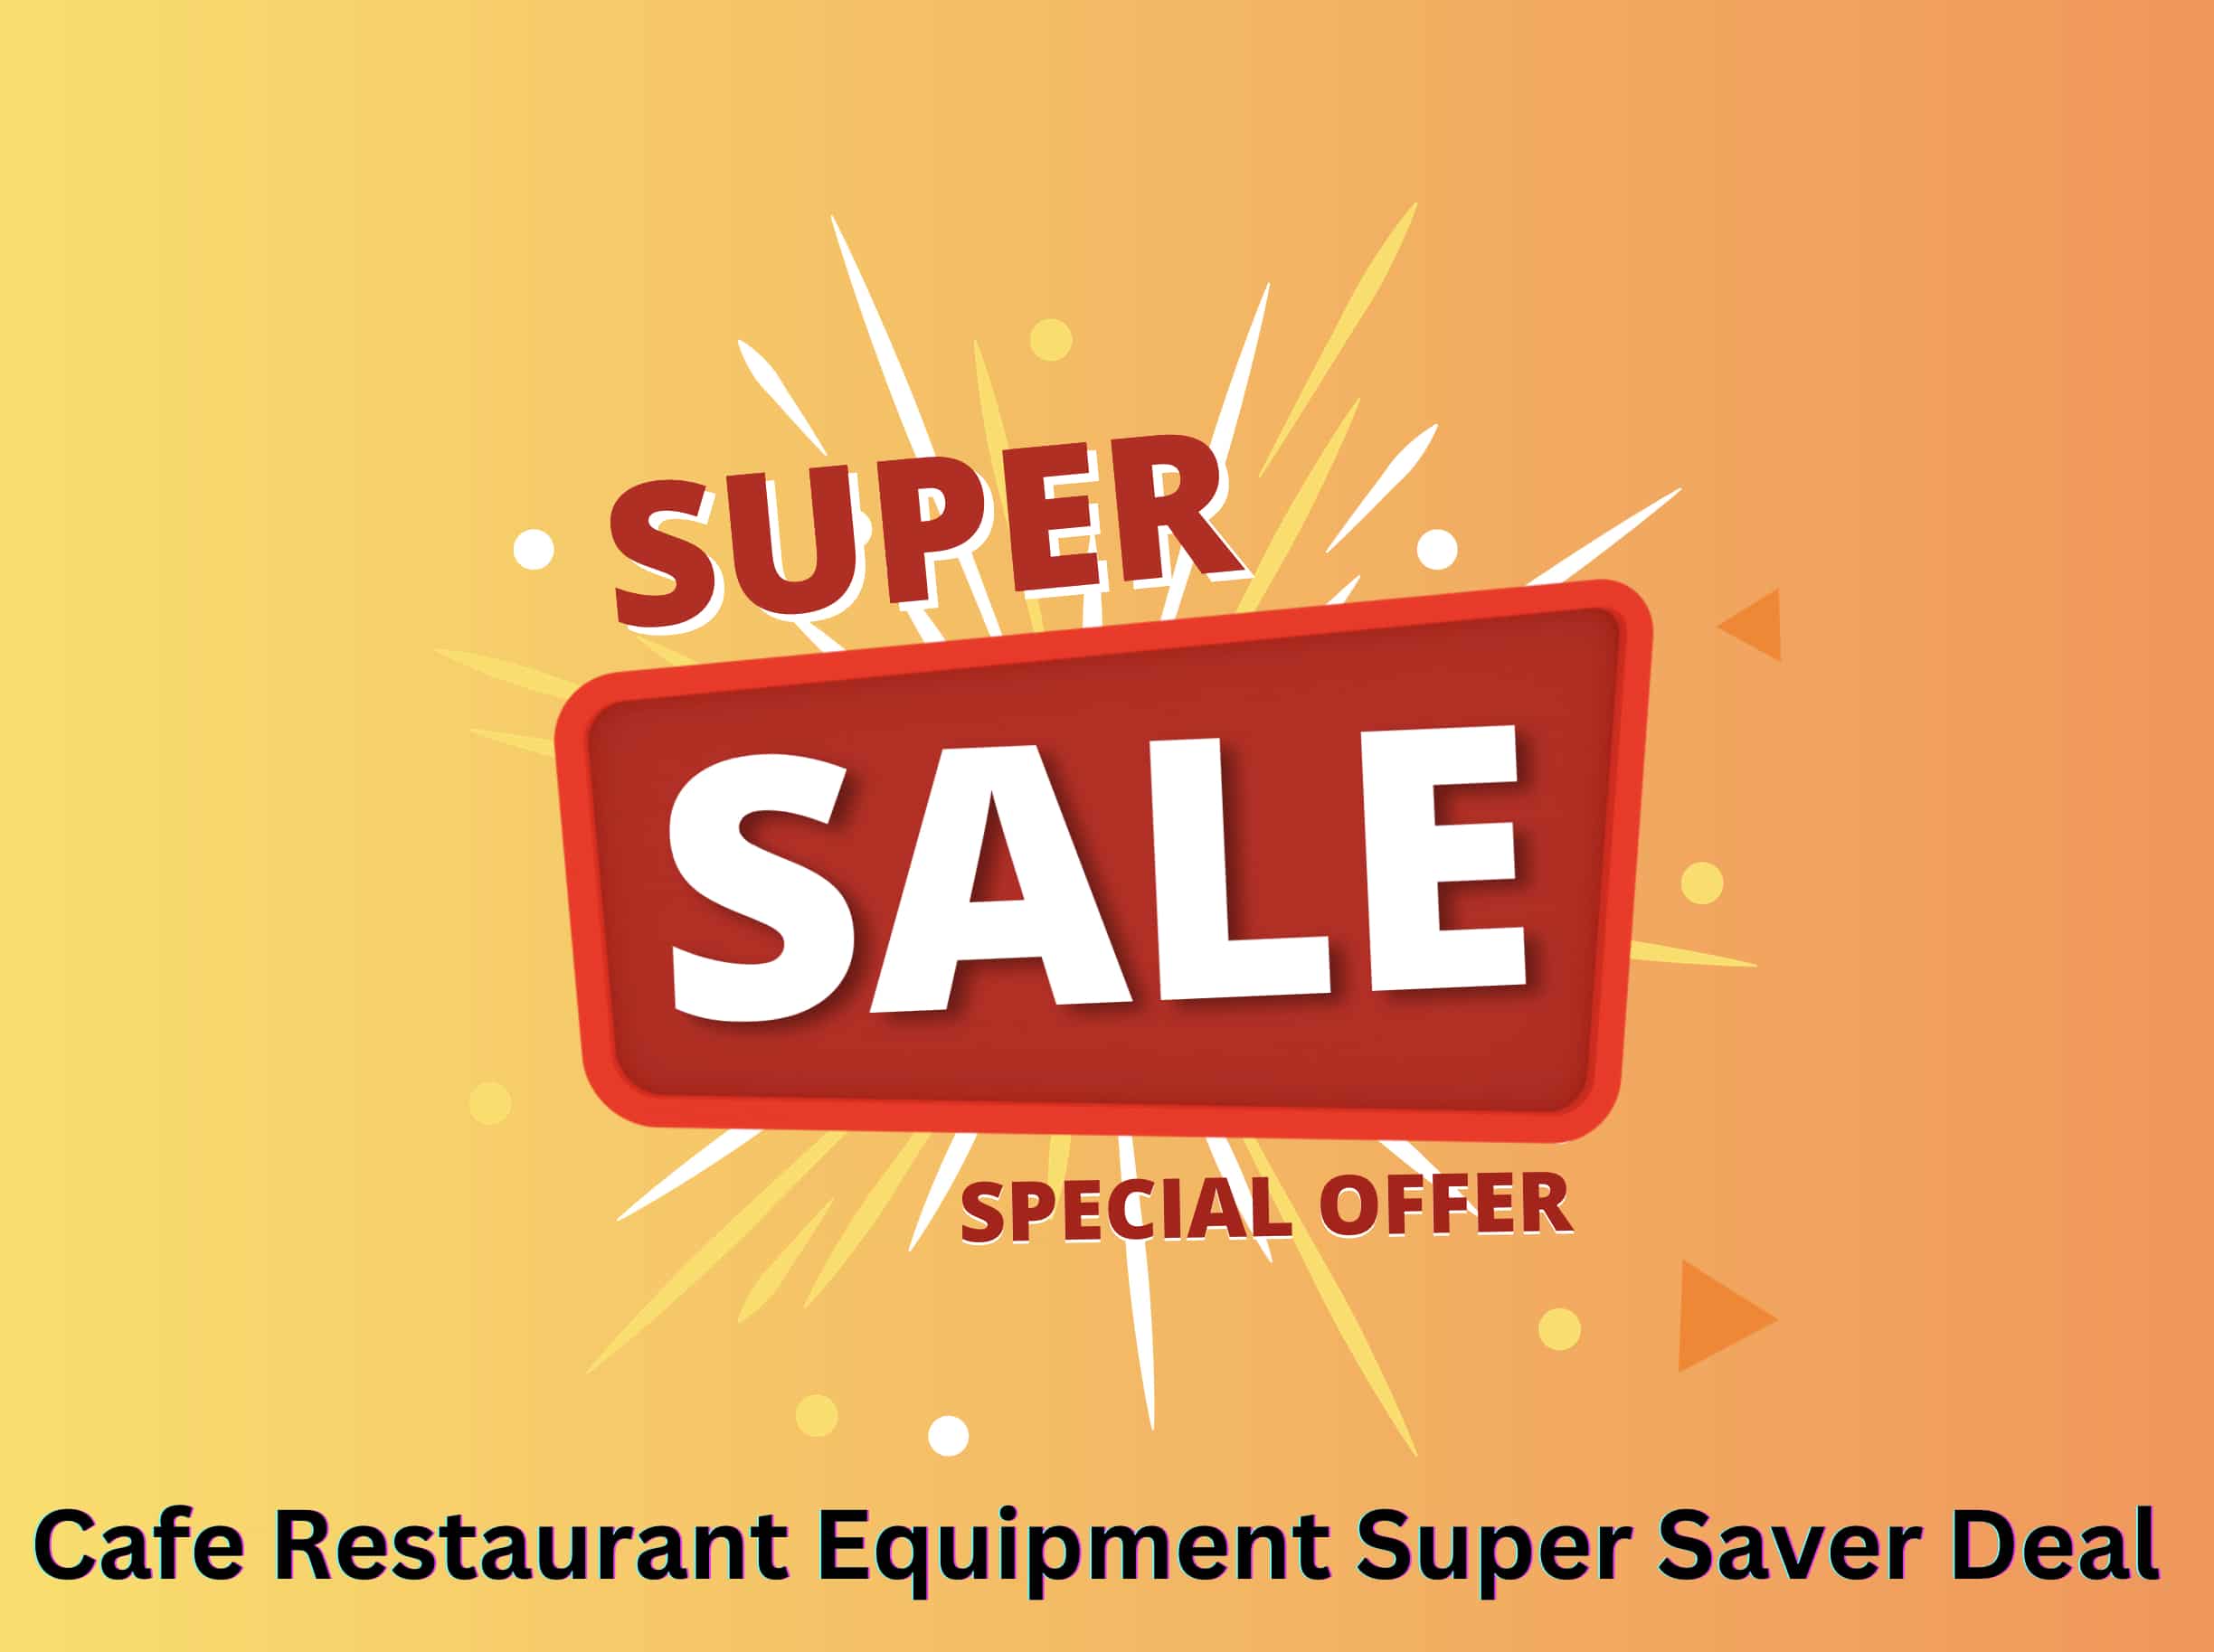 Cafe Restaurant Equipment Super Saver Deal.